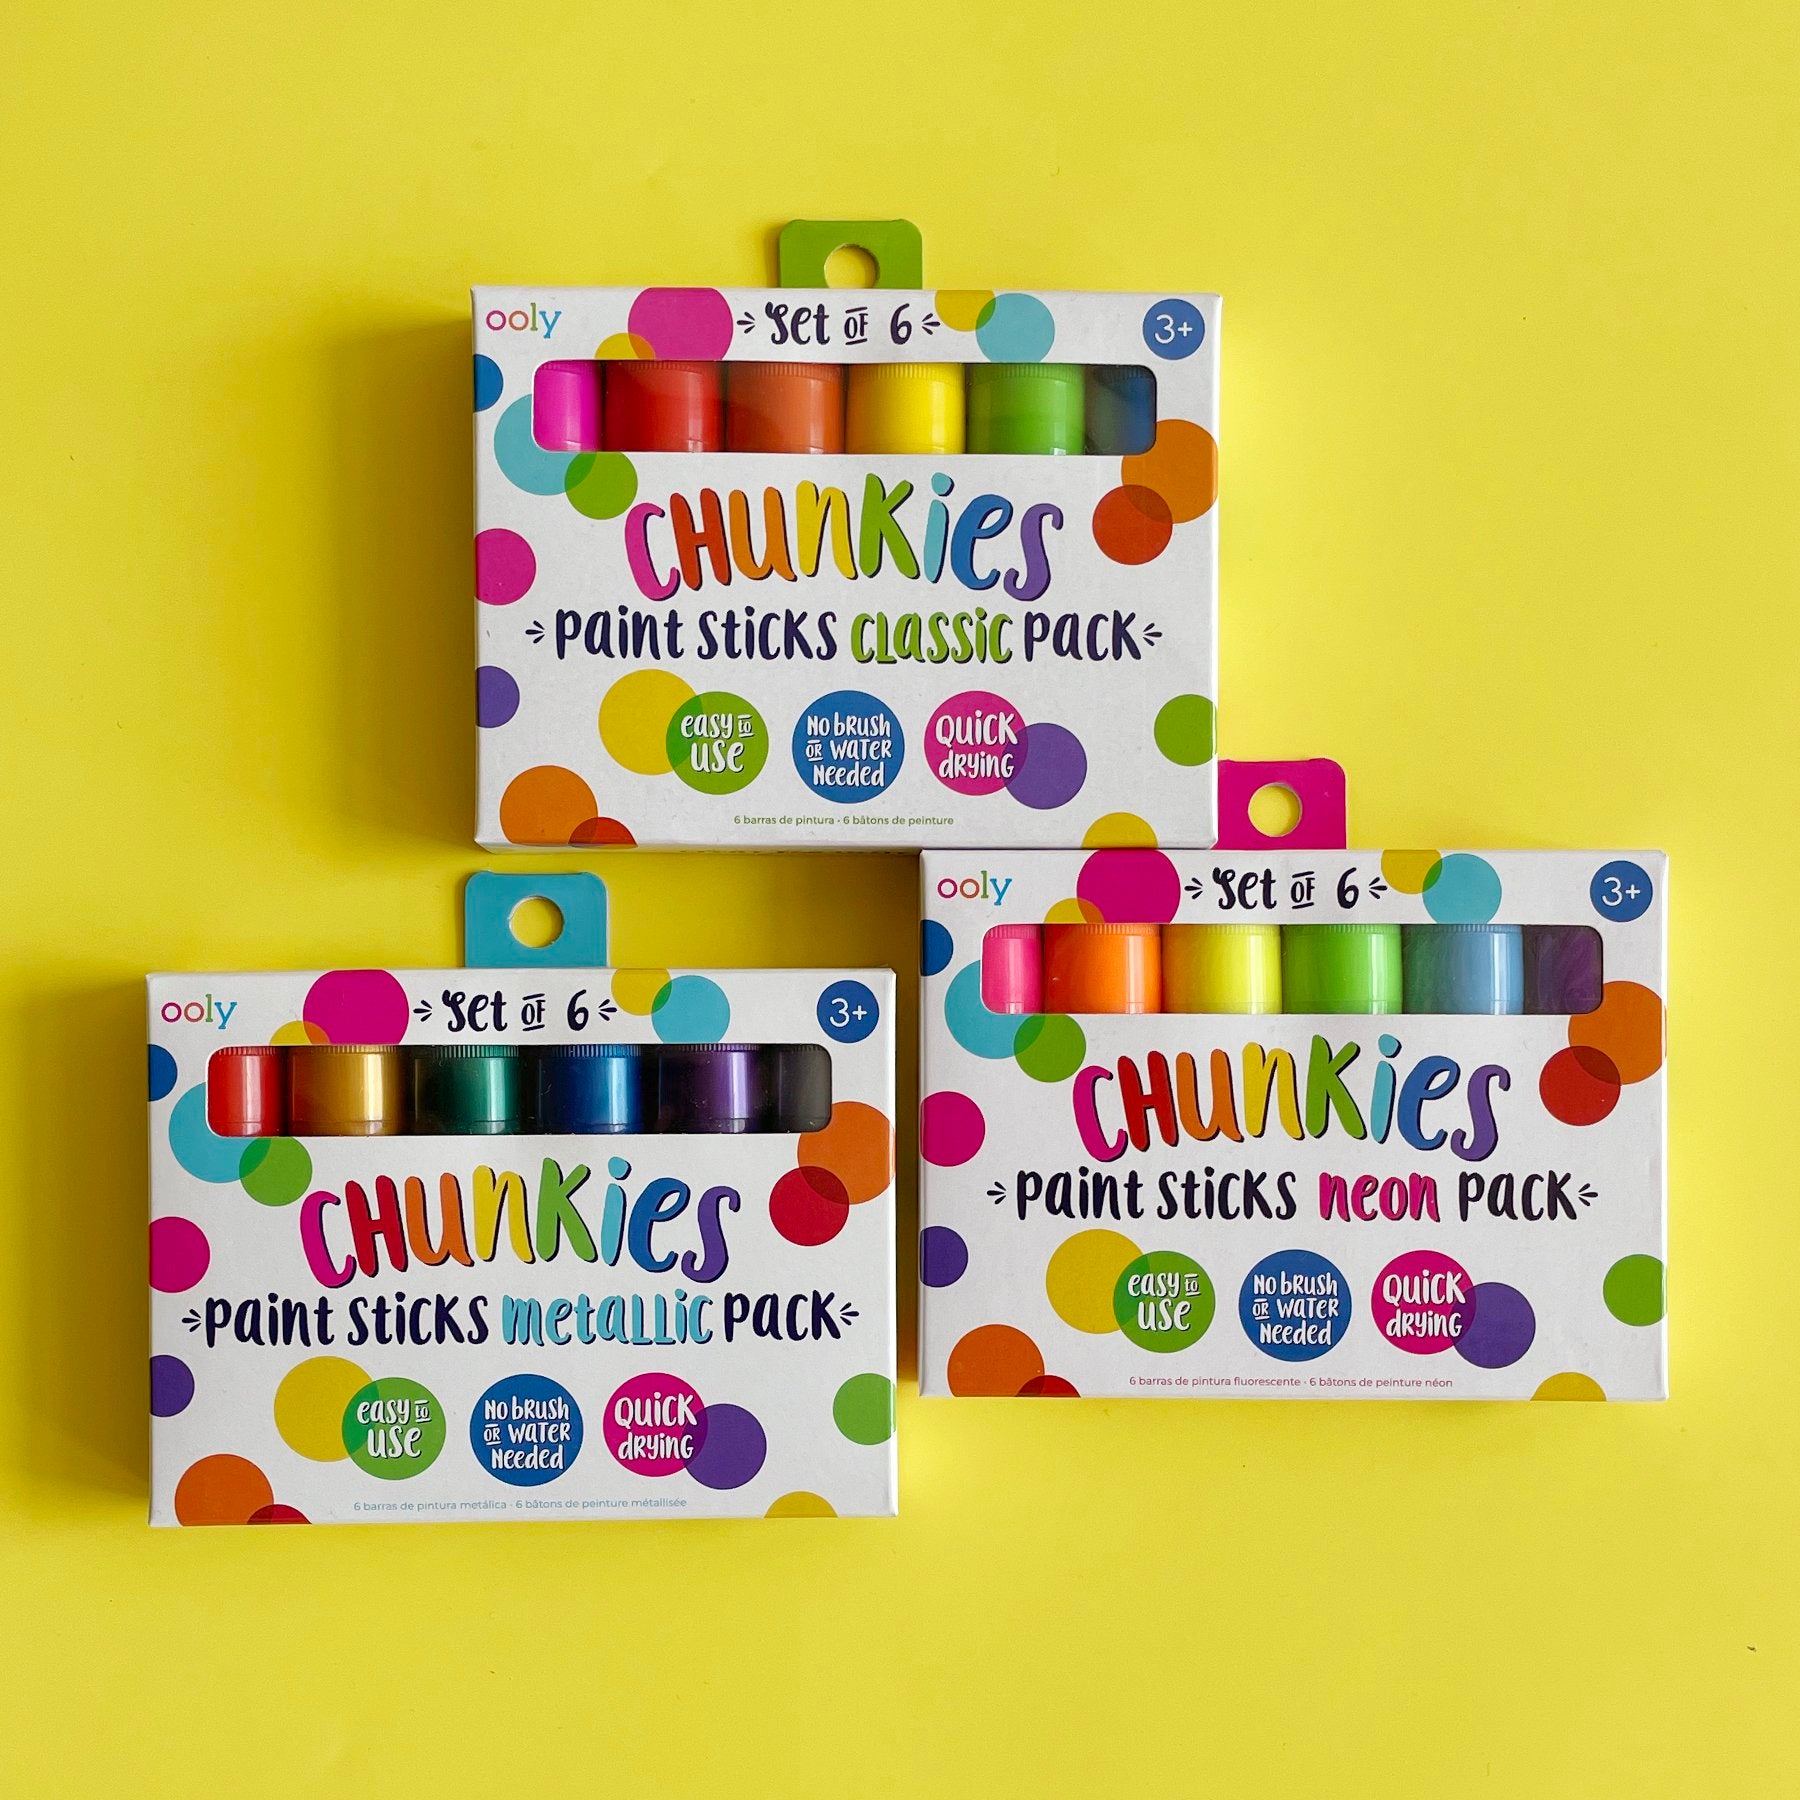 chunkies paint sticks - classic pack - set of 6